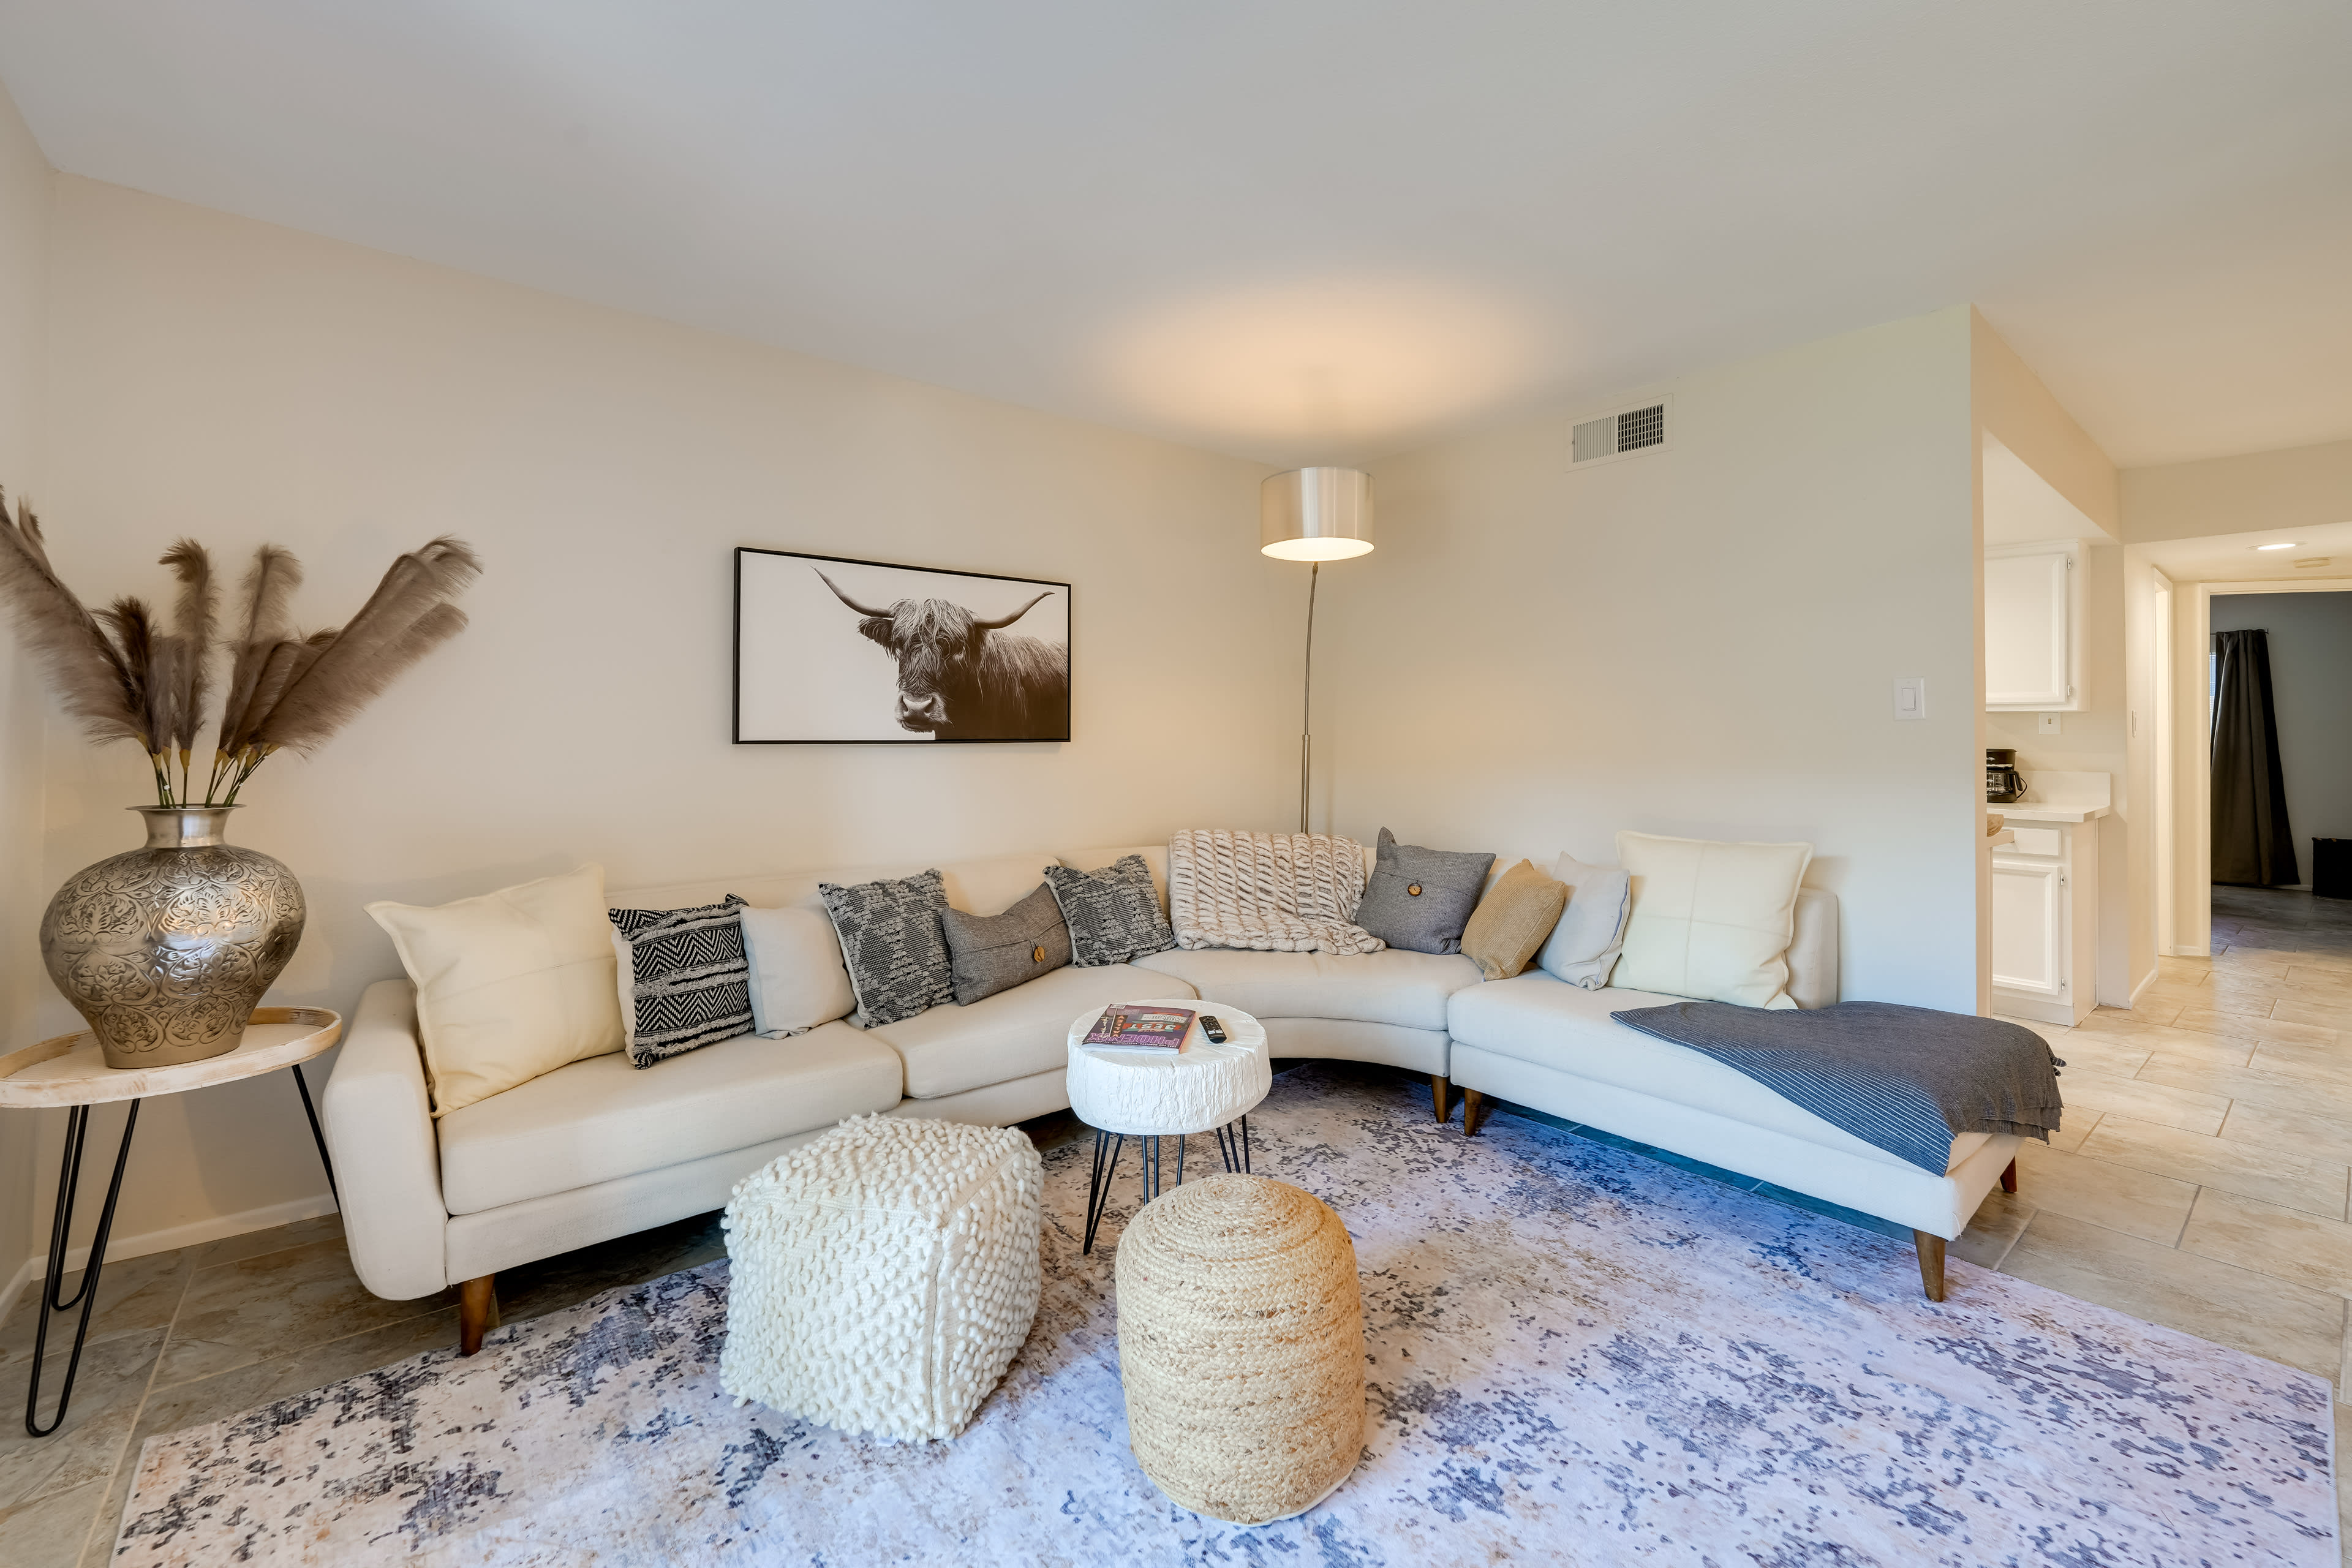 Living Room | Flat-Screen TV | Central Air Conditioning/Heat | Air Mattress